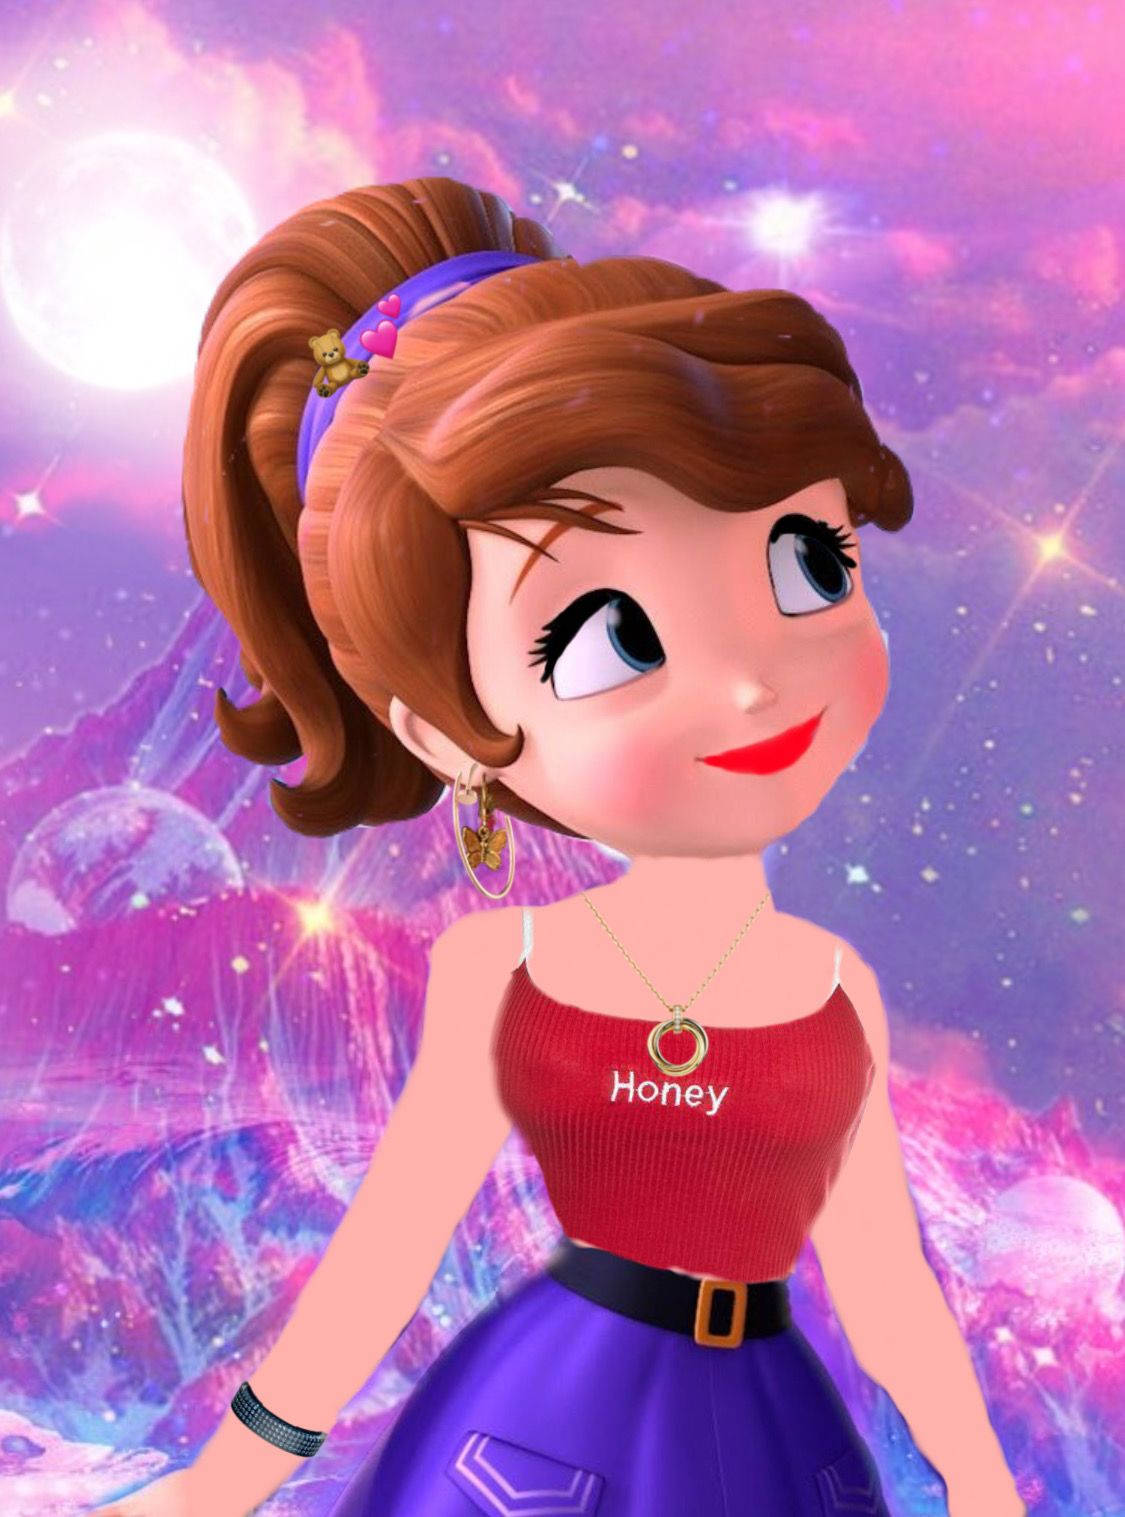 Disney Princess Sofia In Sporty Look Wallpaper